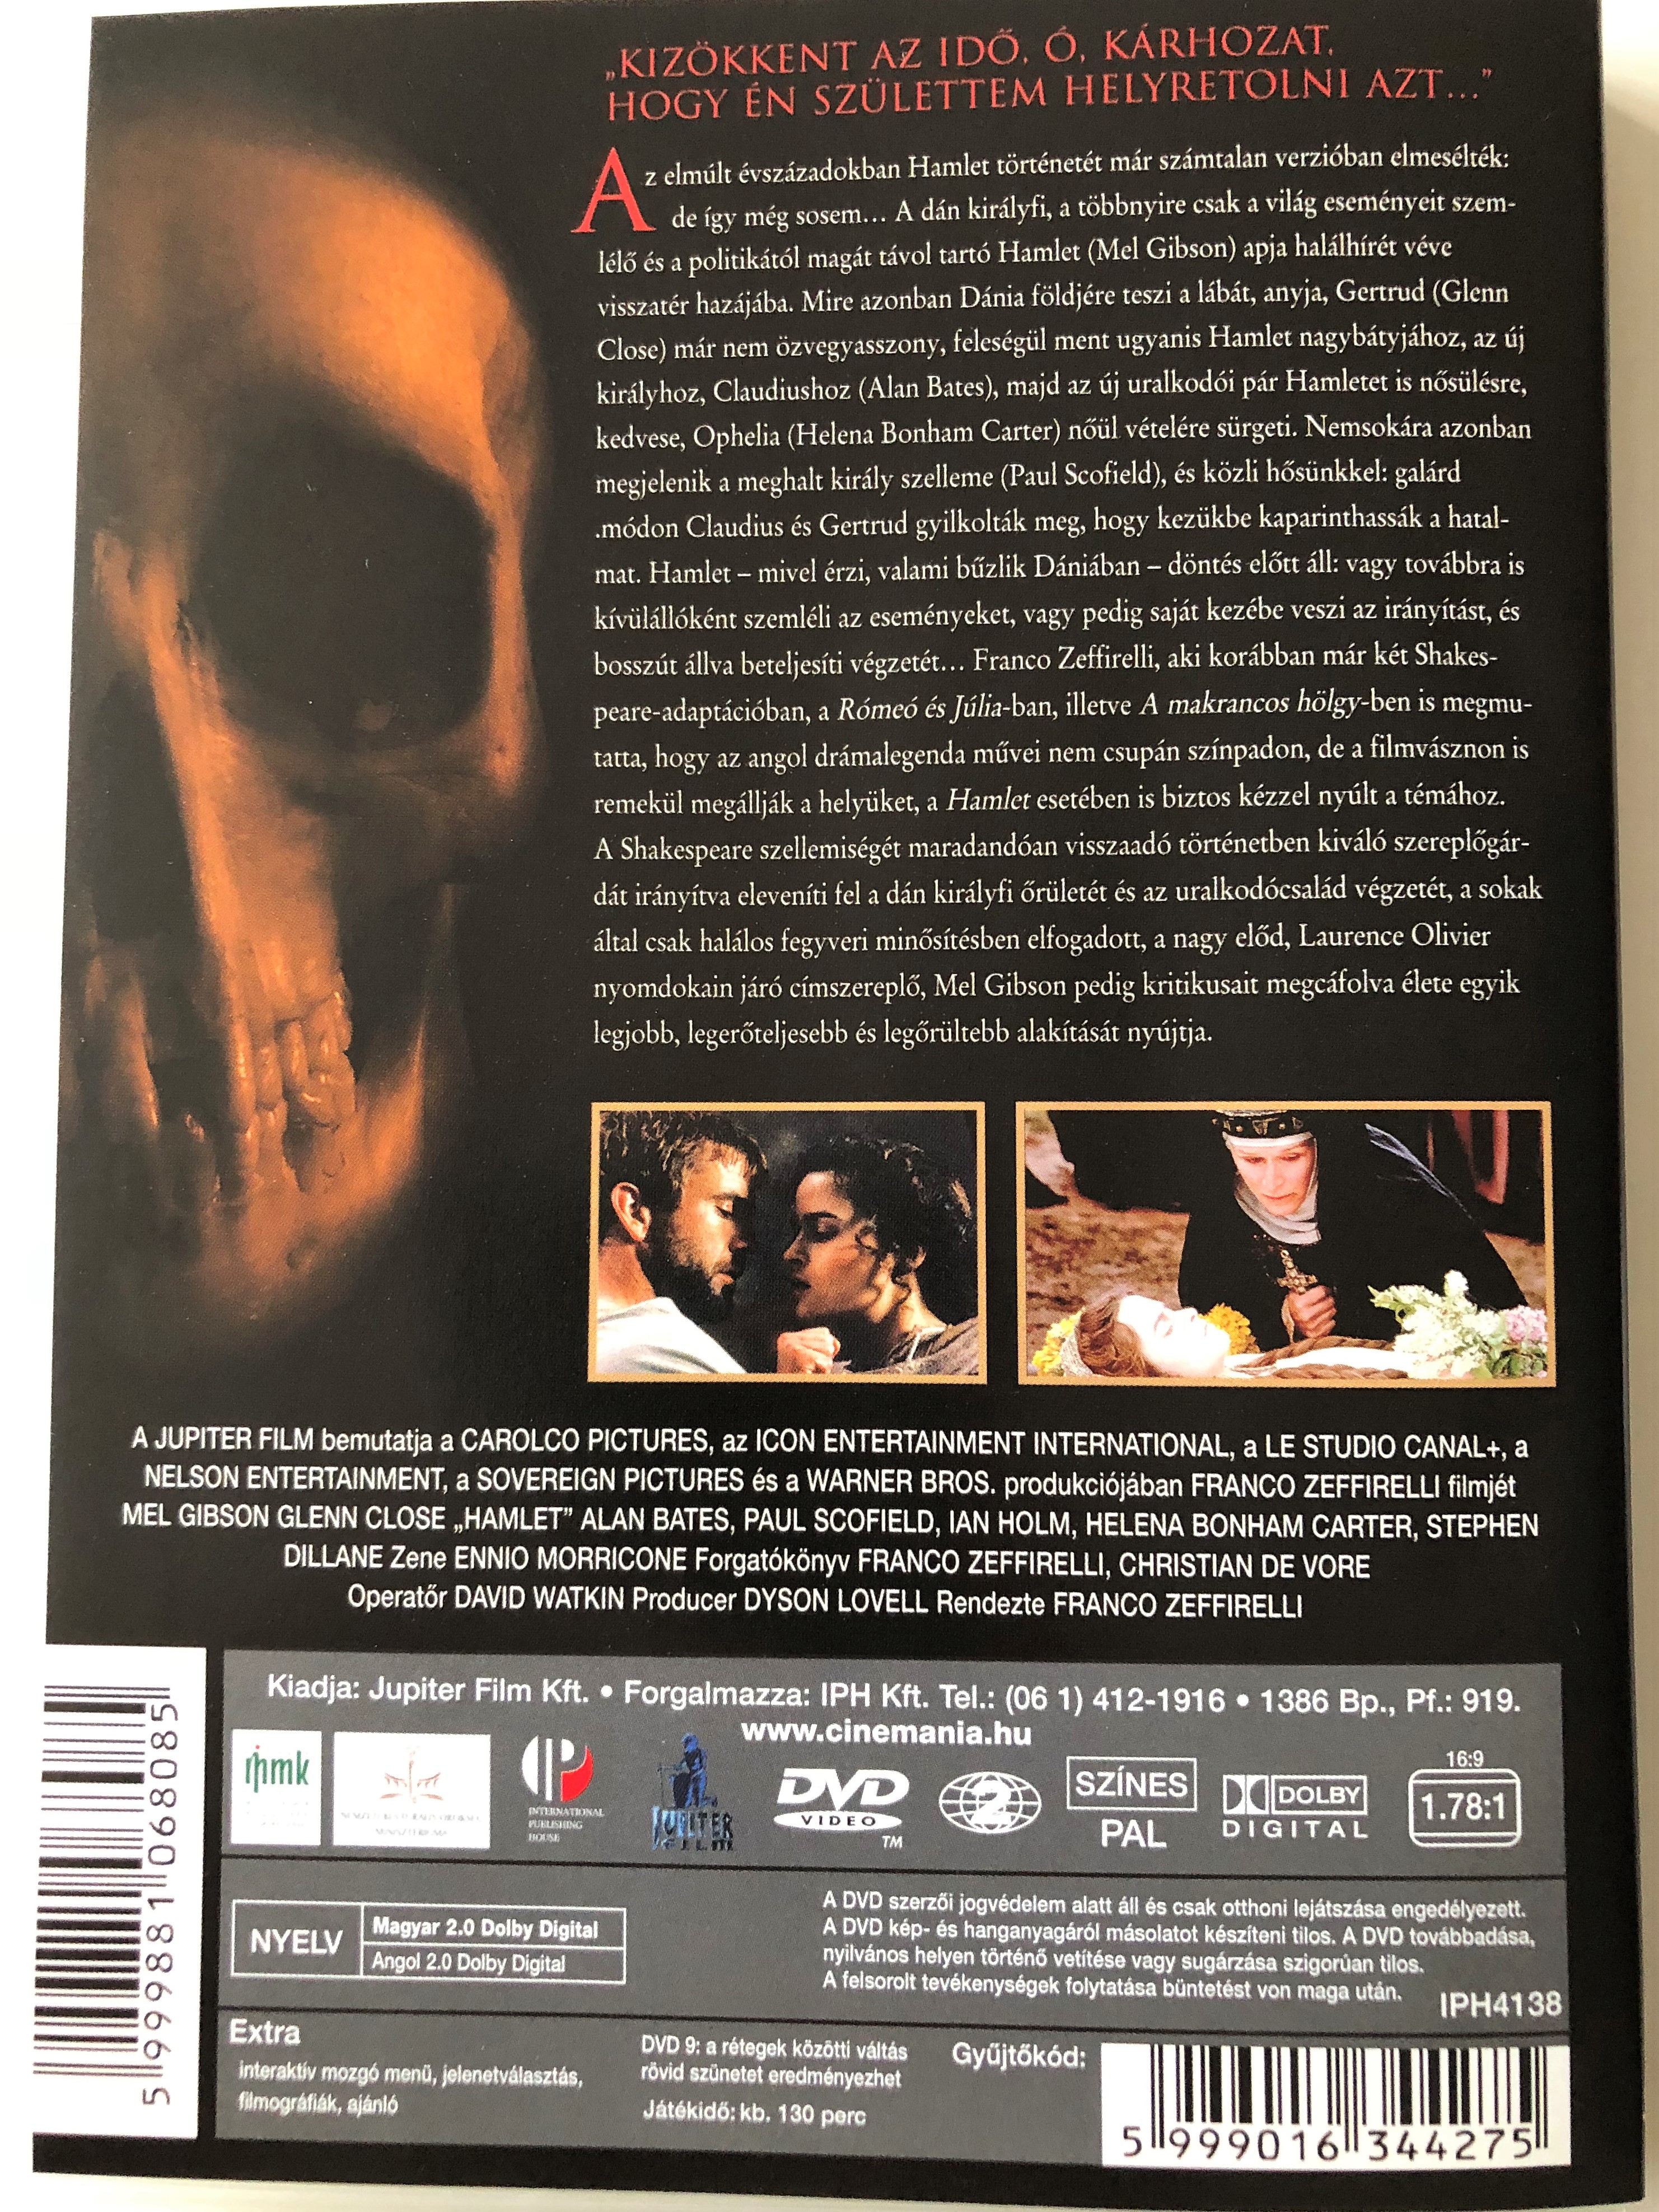 hamlet-dvd-1990-directed-by-franco-zeffirelli-starring-mel-gibson-glenn-close-w.-shakespeare-classic-film-adaptation-2-.jpg